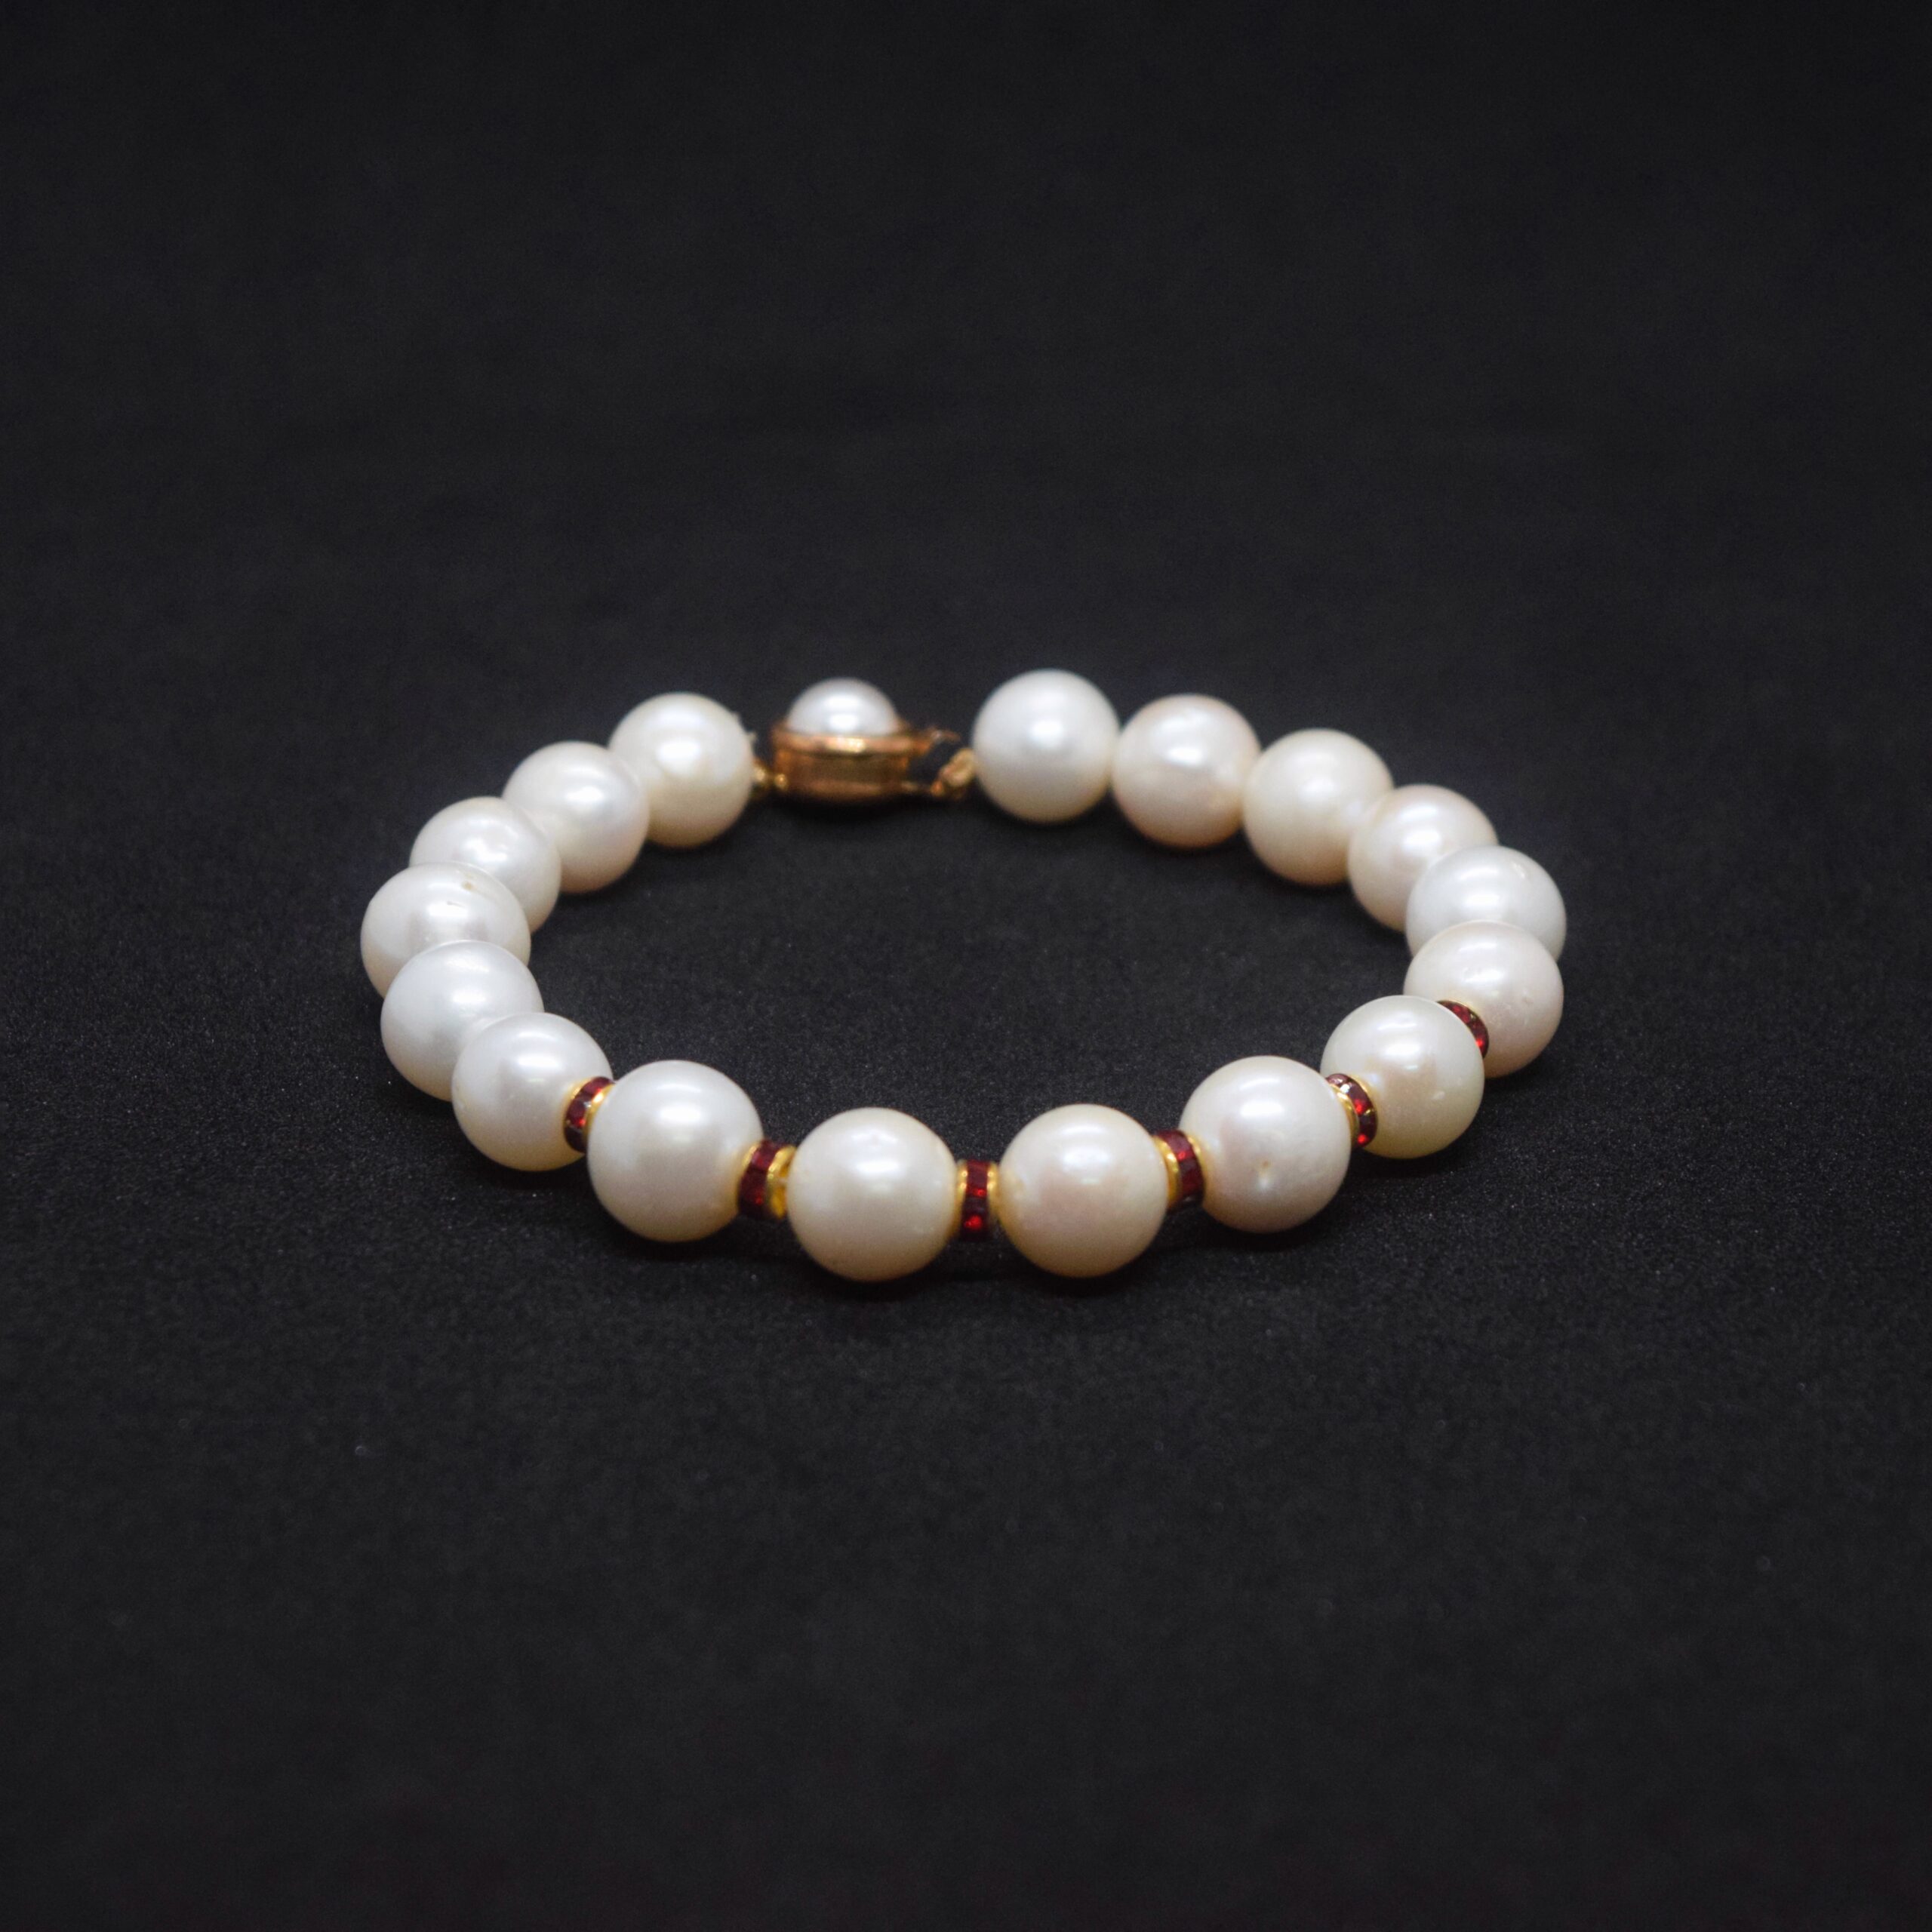 Buy NEXG Pearl Bracelet Original Certified Natural Mukta Stone Bracelet  Round Beads Gorgeous White Pearl Bracelet Sacche Moti Bracelet White Moti  Bracelet For Boys And Girls सच्चे मोती का ब्रेसलेट at Amazon.in